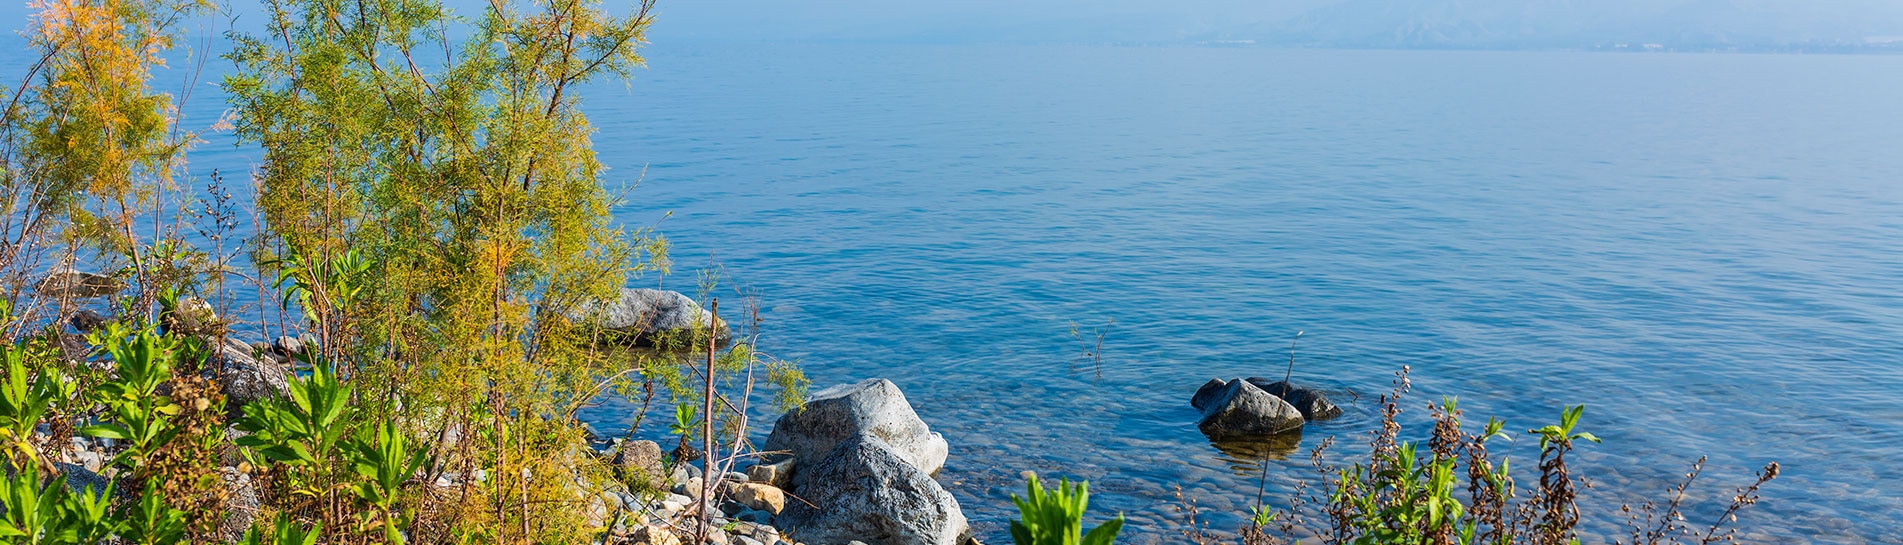 Kinneret Beaches: Visit the Sea of Galilee